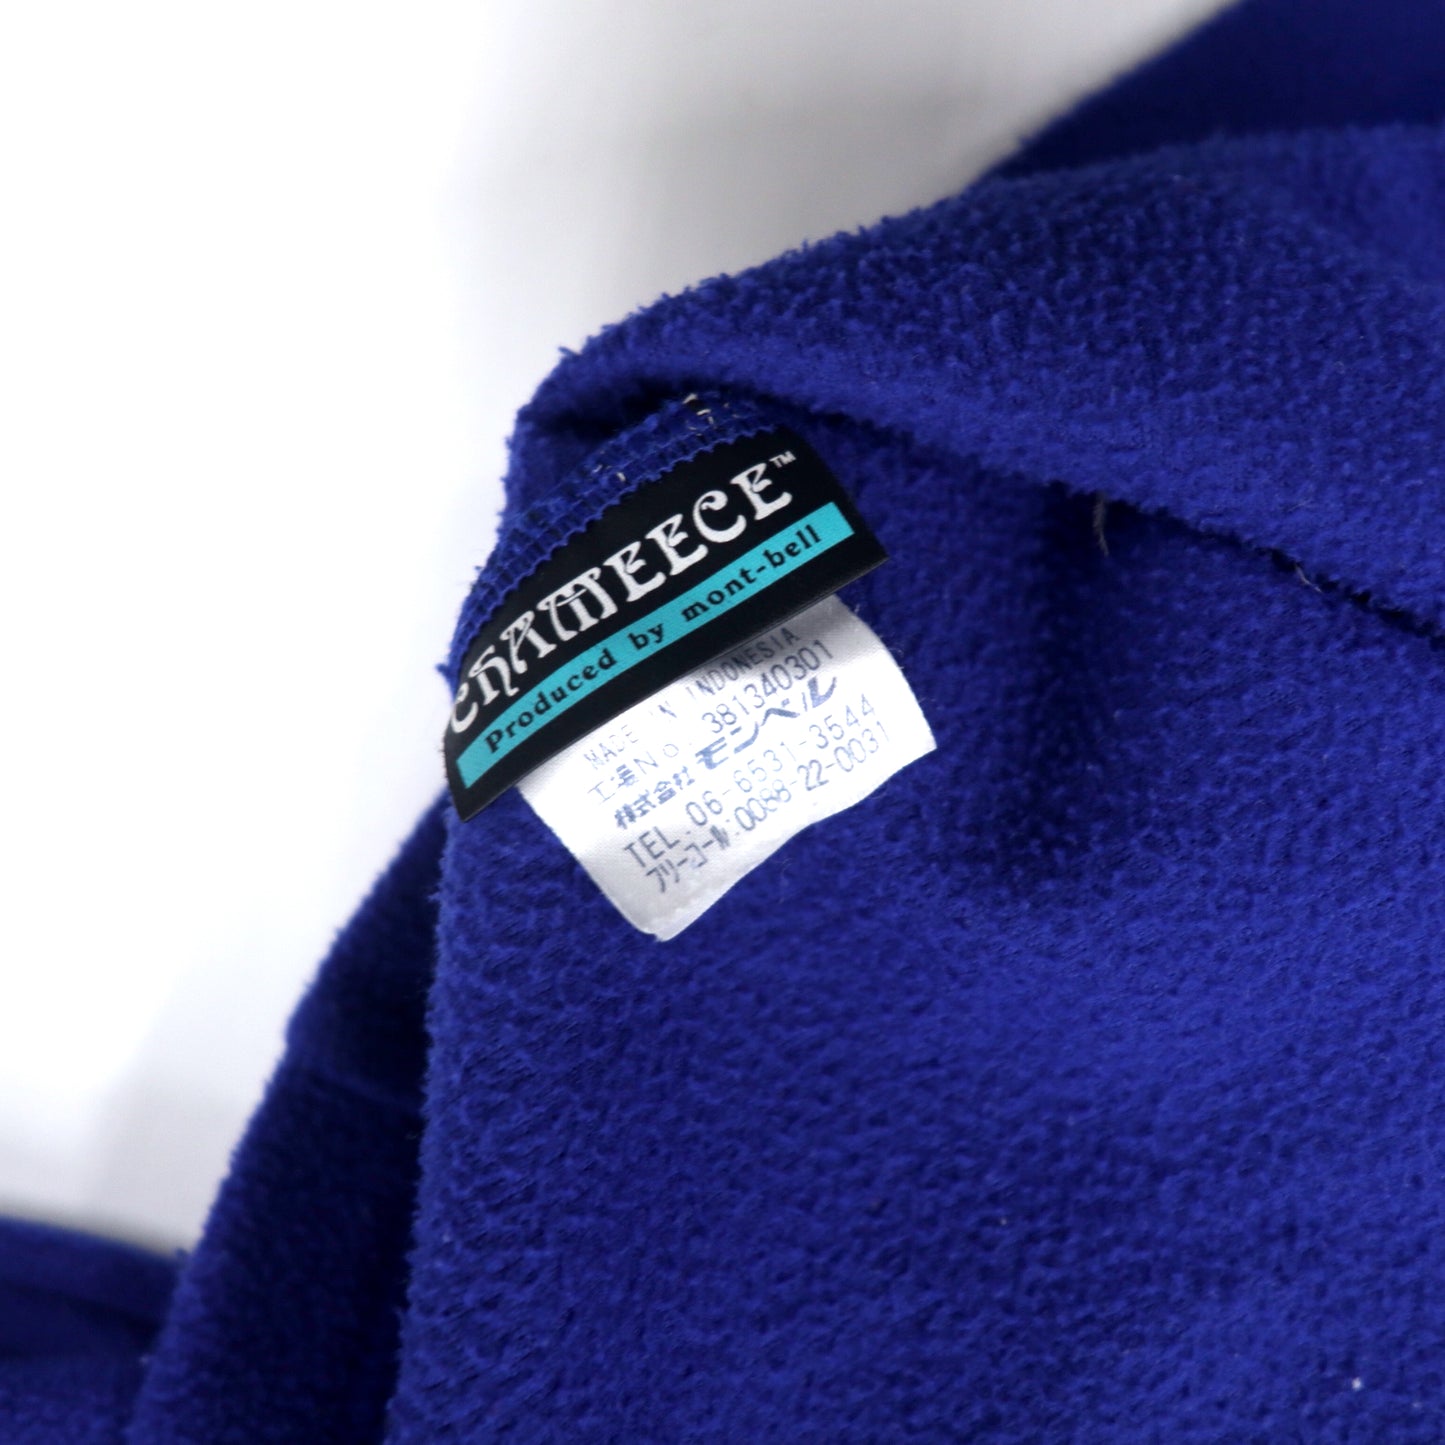 mont-bell シャミース インナージャケット フリース L ブルー ポリエステル ワンポイントロゴ刺繍 1104867